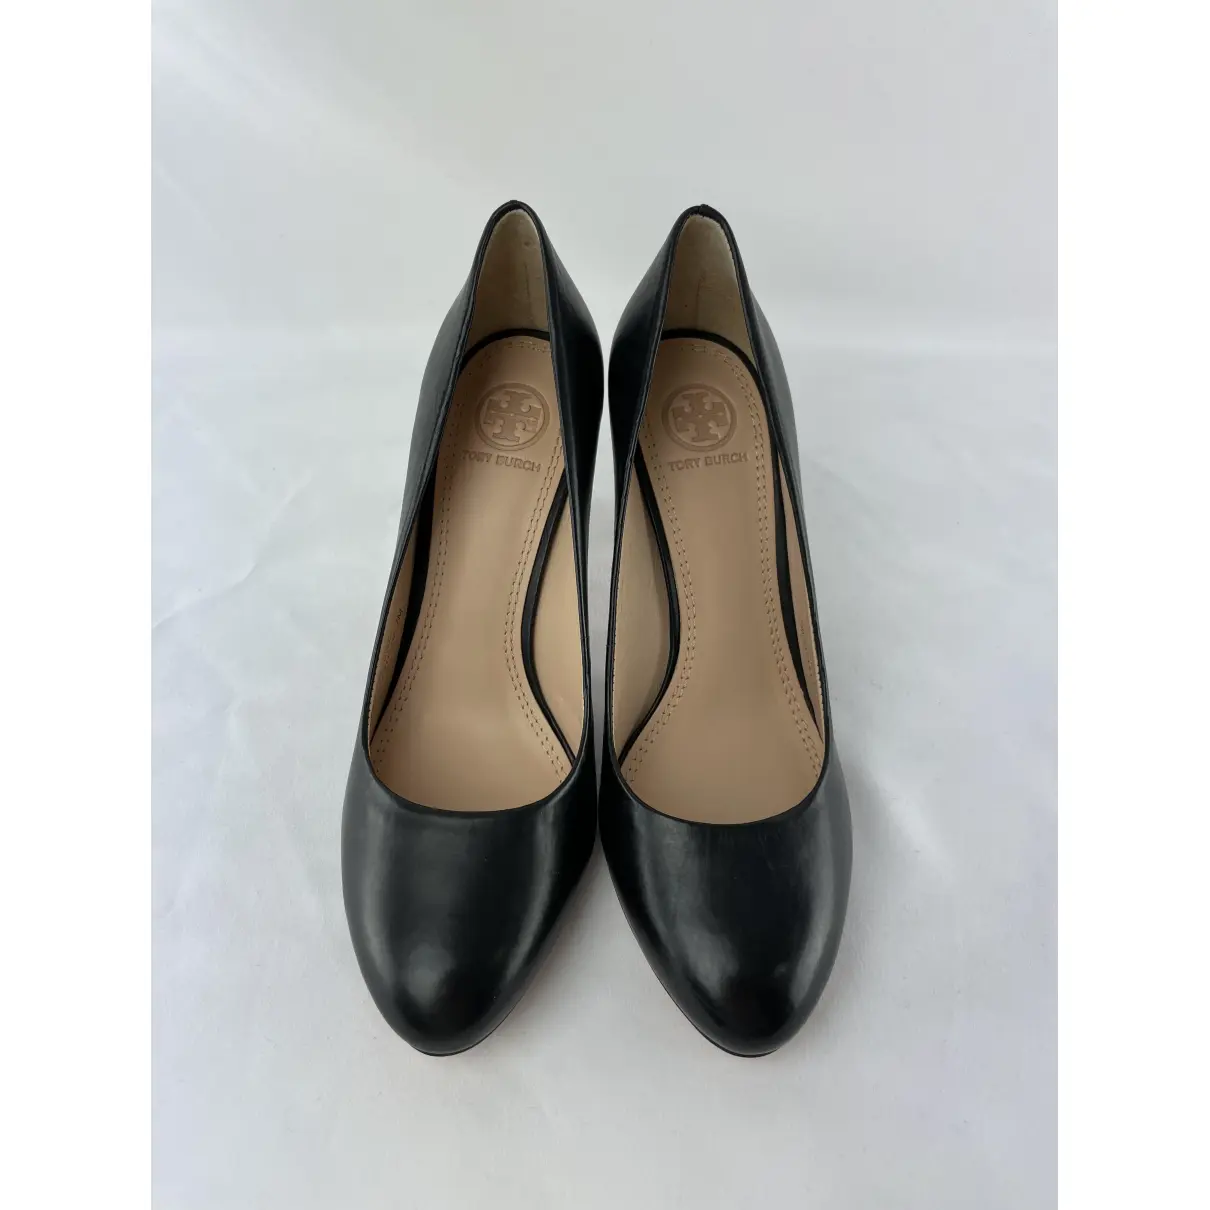 Buy Tory Burch Leather heels online